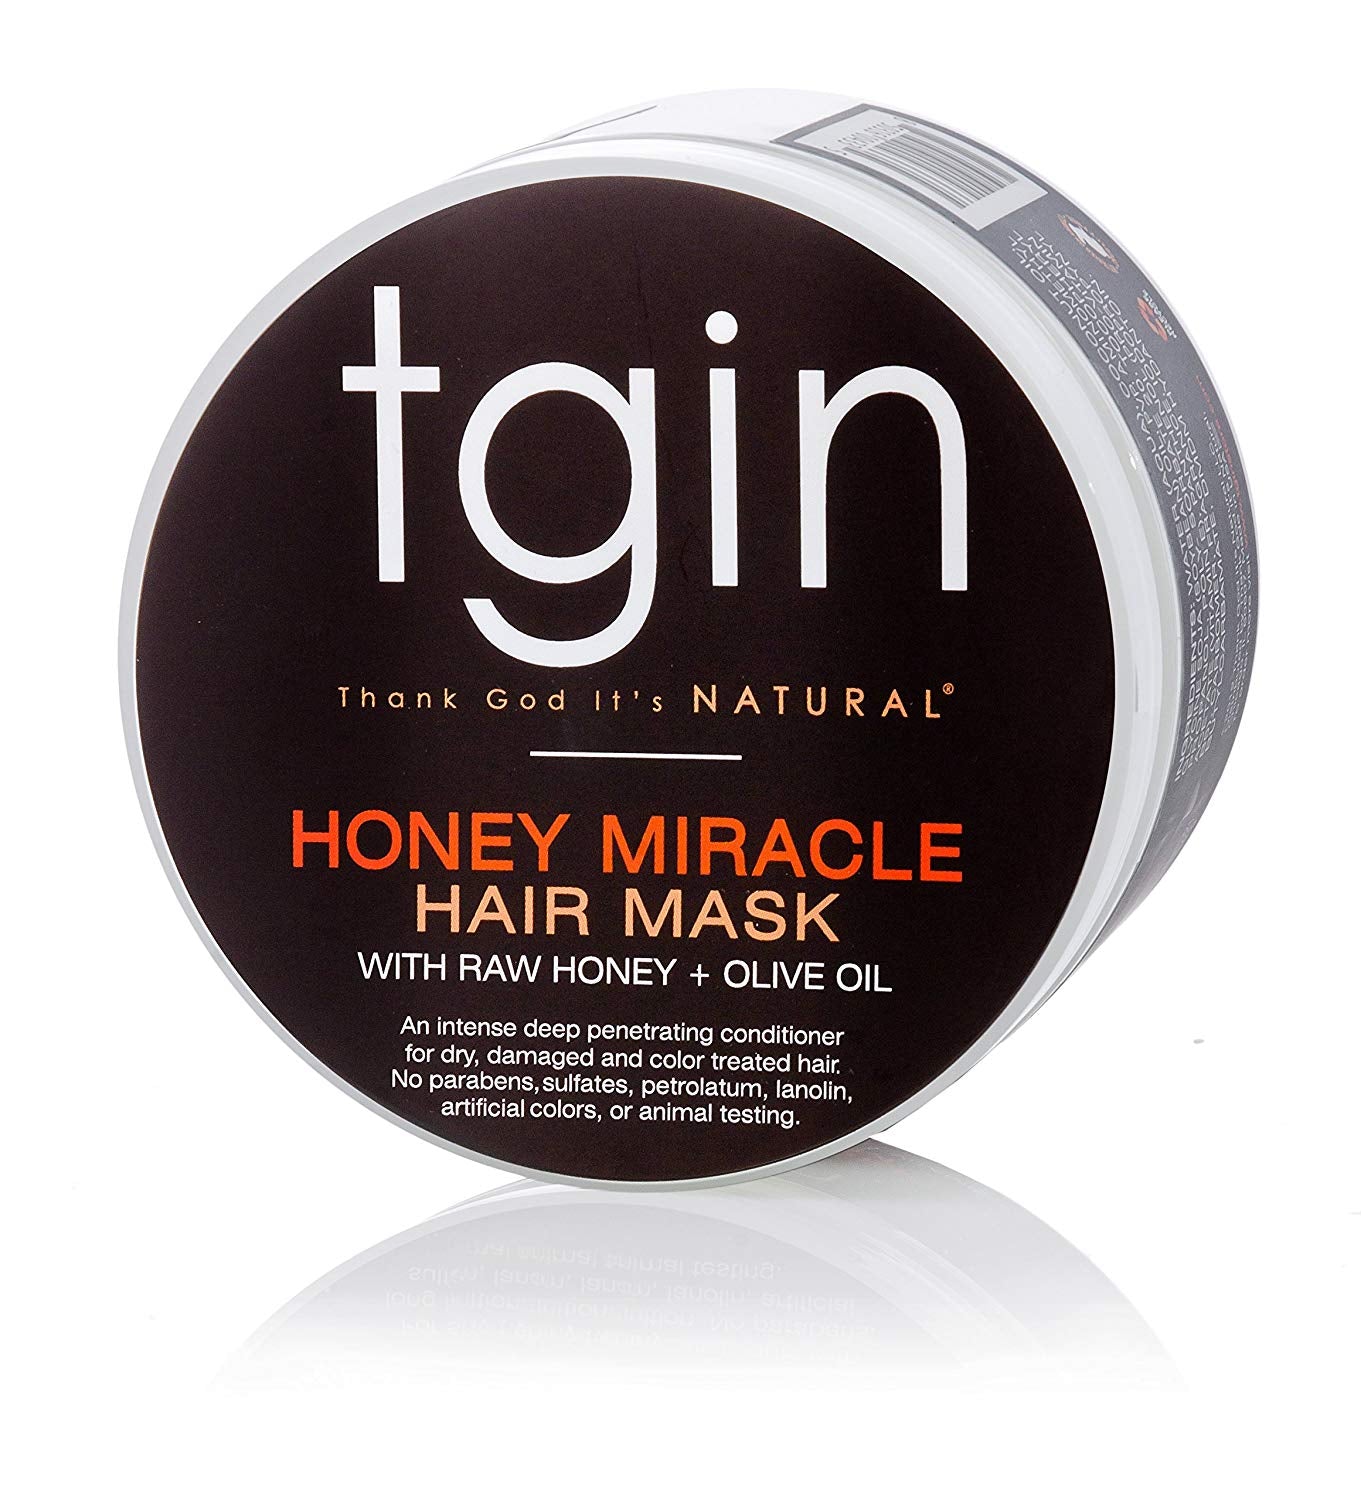 TGIN- Honey Miracle Hair Mask